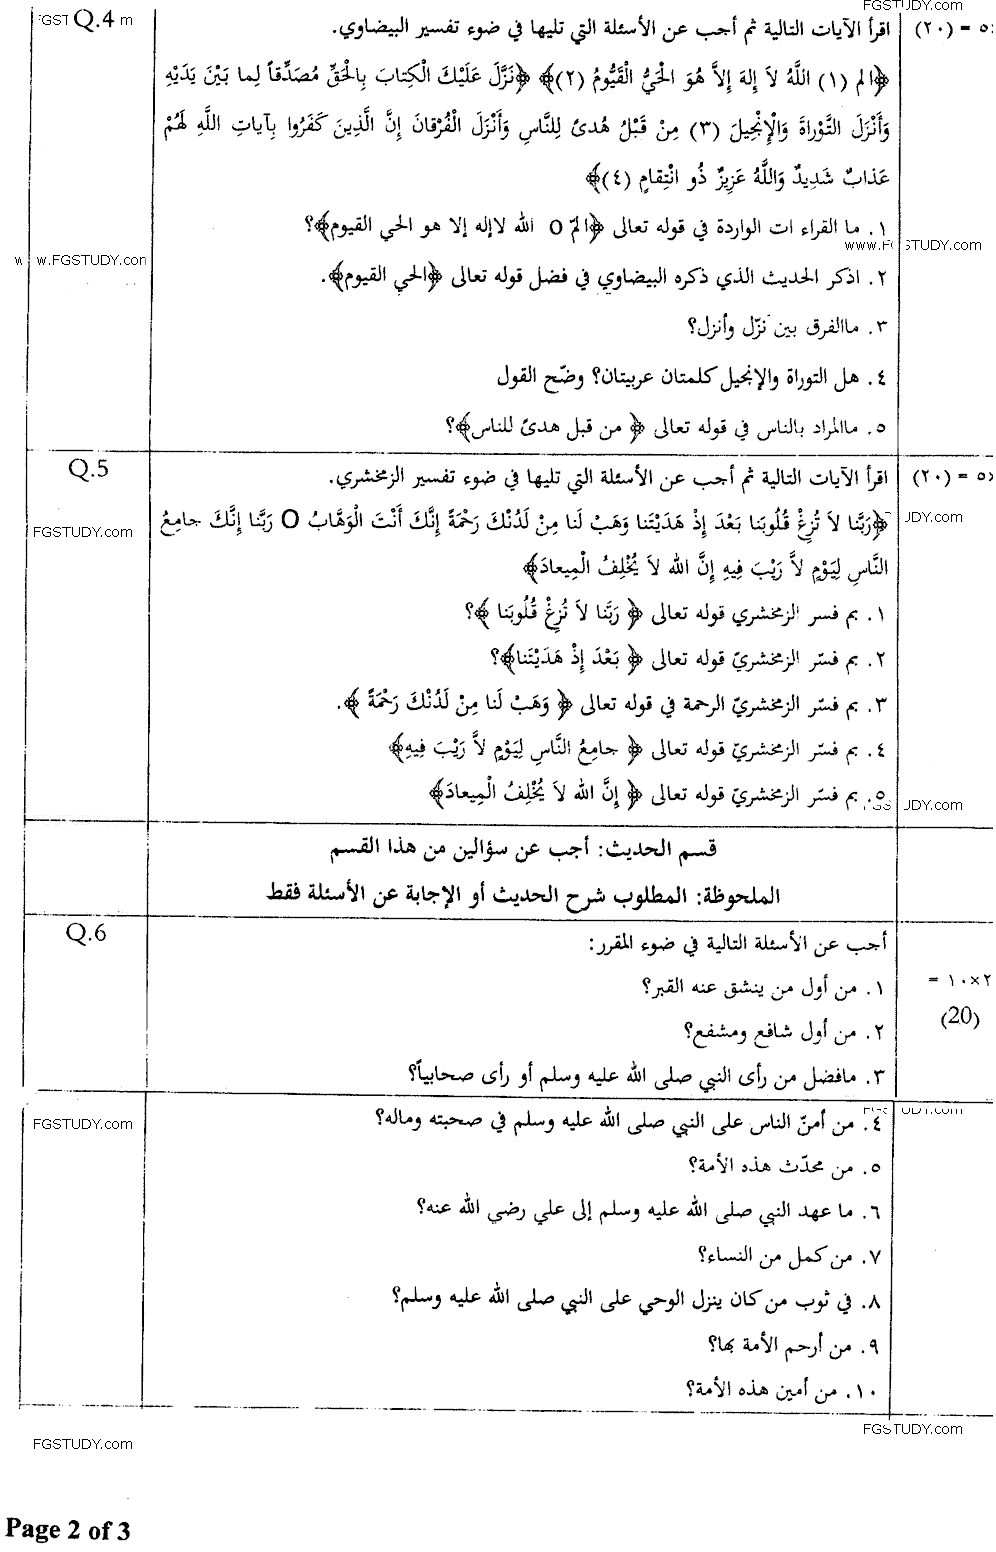 MA Part 1 Arabic Al Adab Al Deeni Past Paper 2018 Punjab University